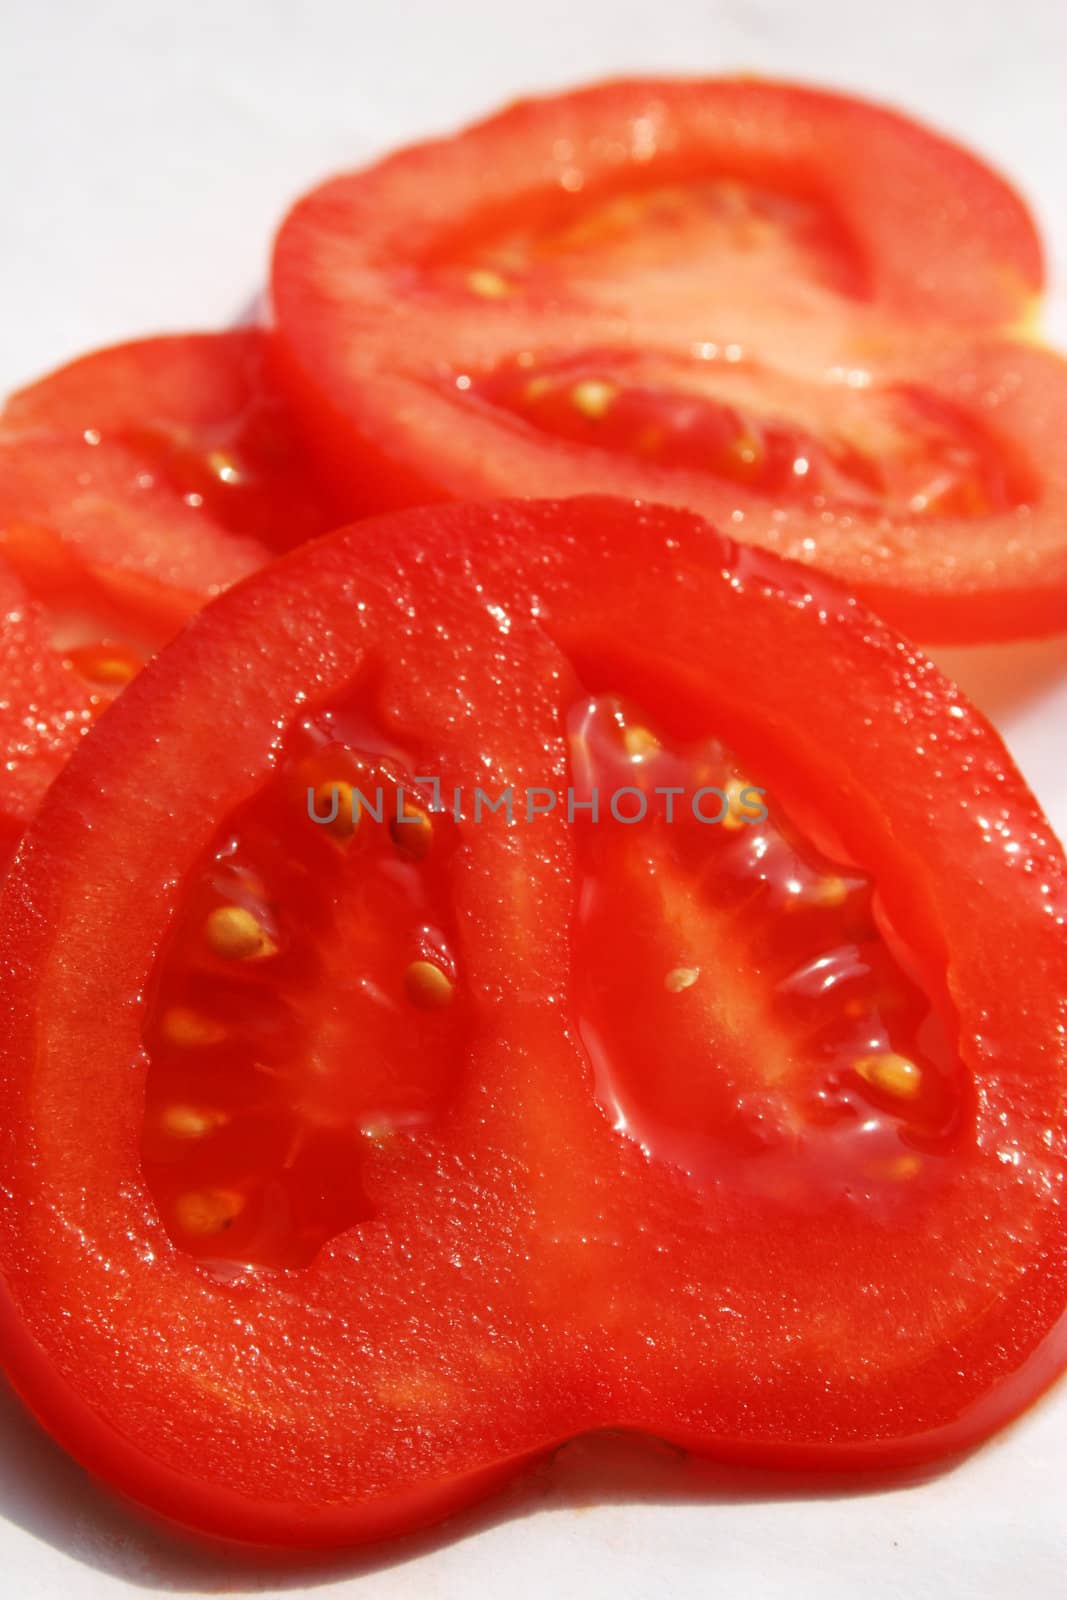 Juicy red tomato slices